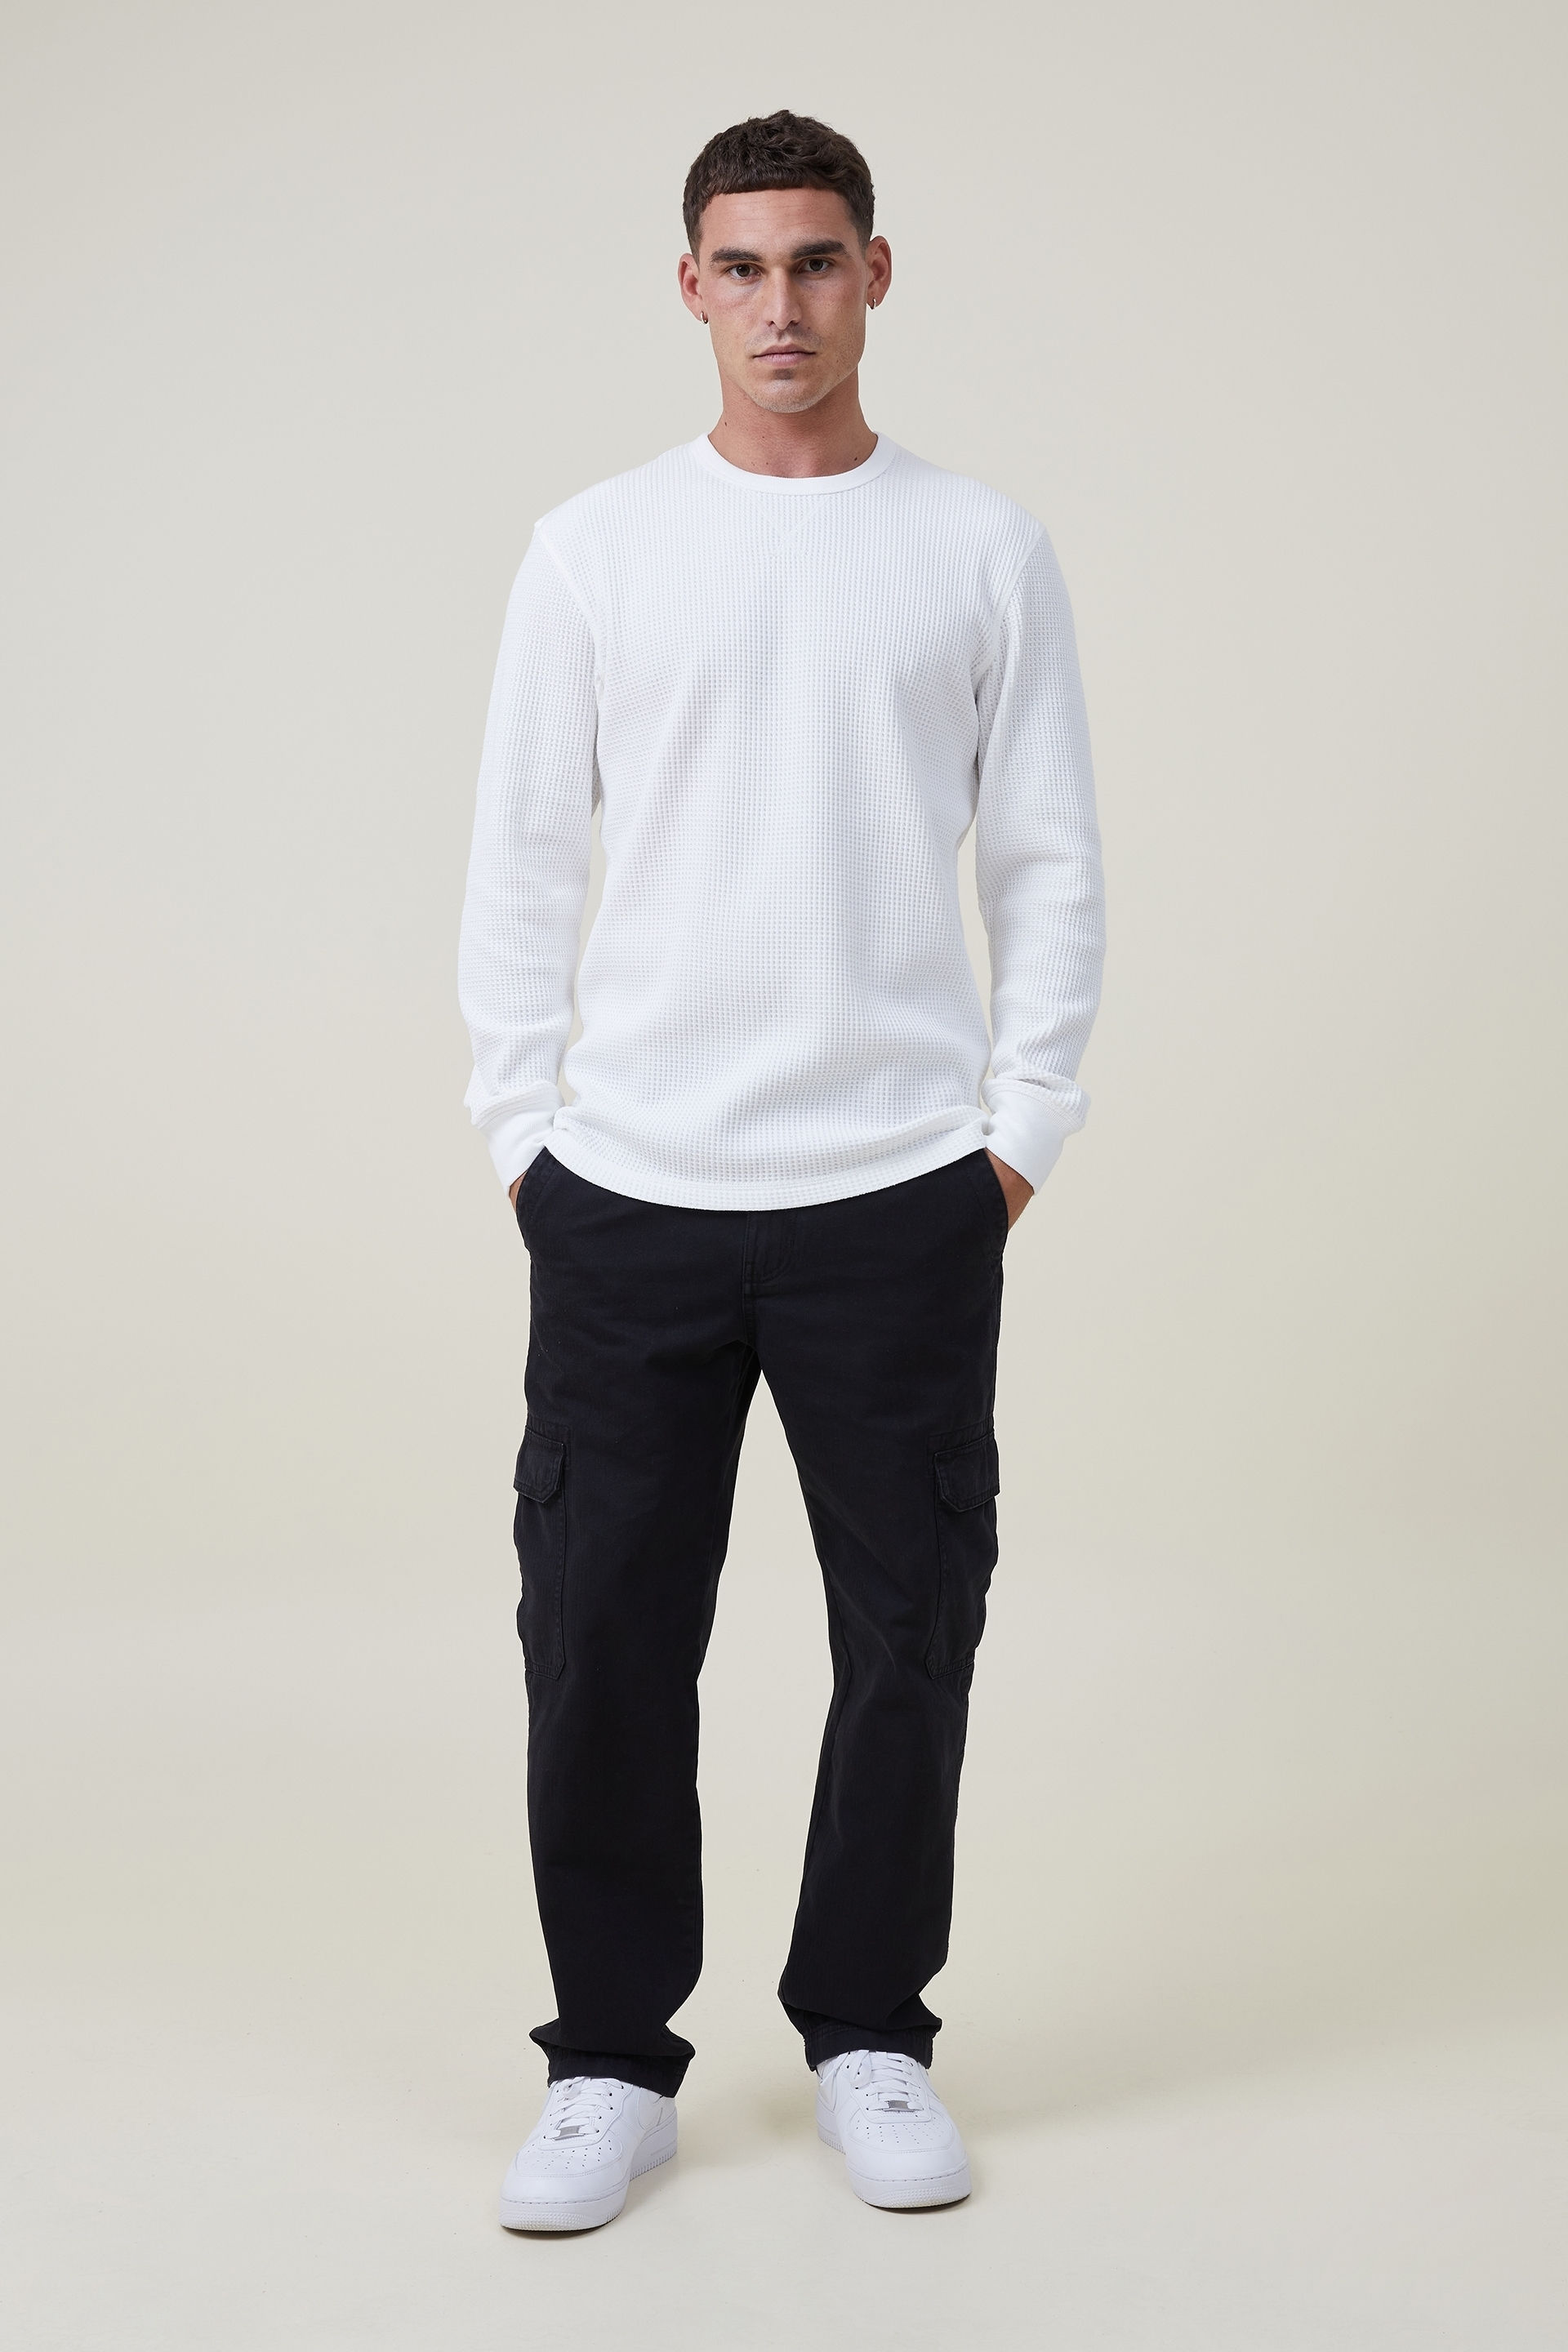 Cotton on Men - Boston Long Sleeve Shirt - Black Waffle Check